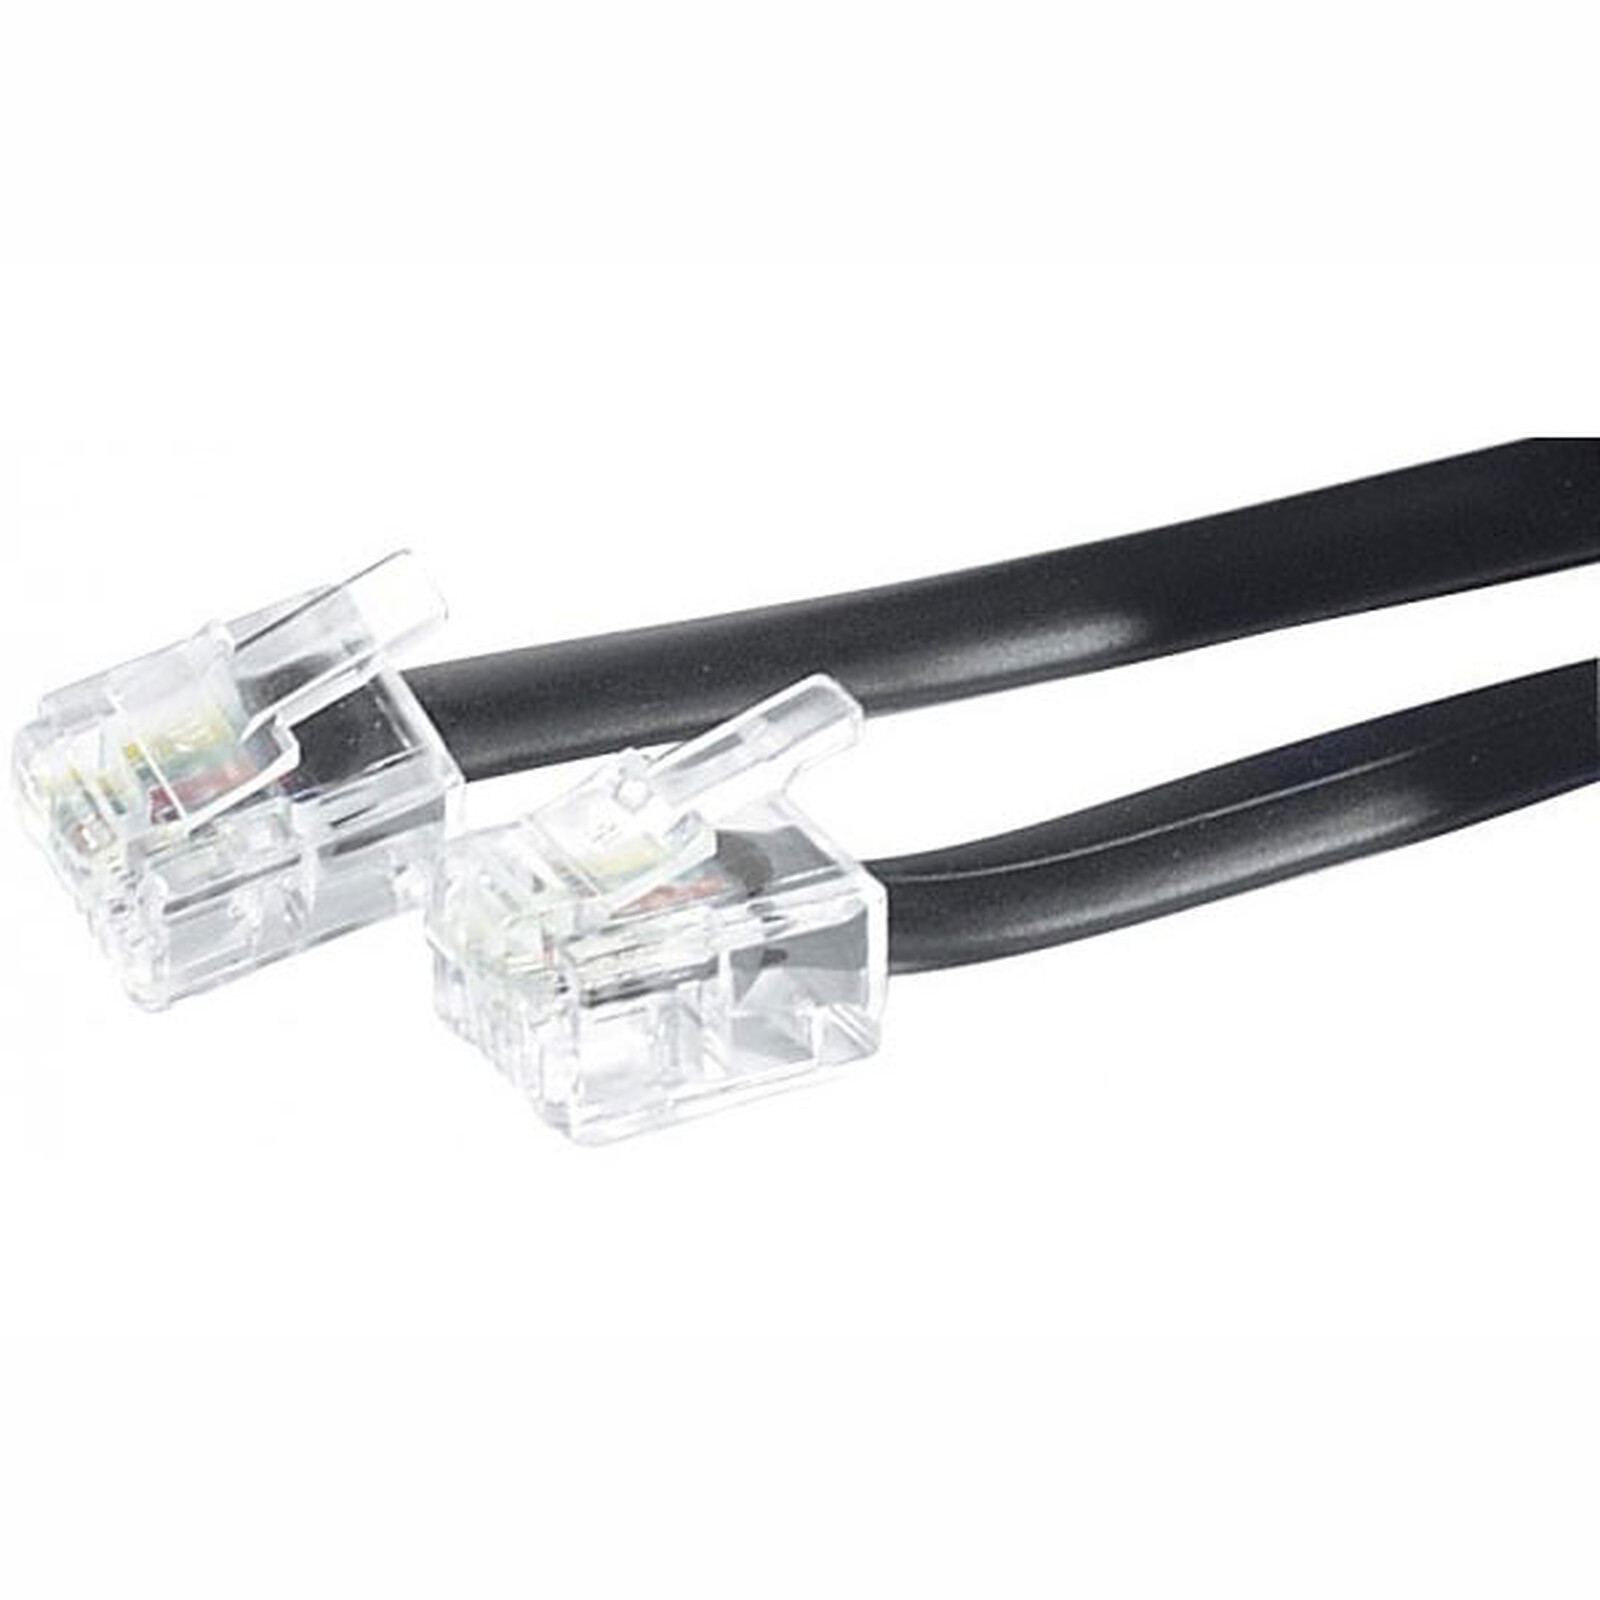 Câble RJ11 mâle/mâle (2 mètres) - (coloris noir) - Câble RJ11, RJ9 & RJ12 -  Garantie 3 ans LDLC